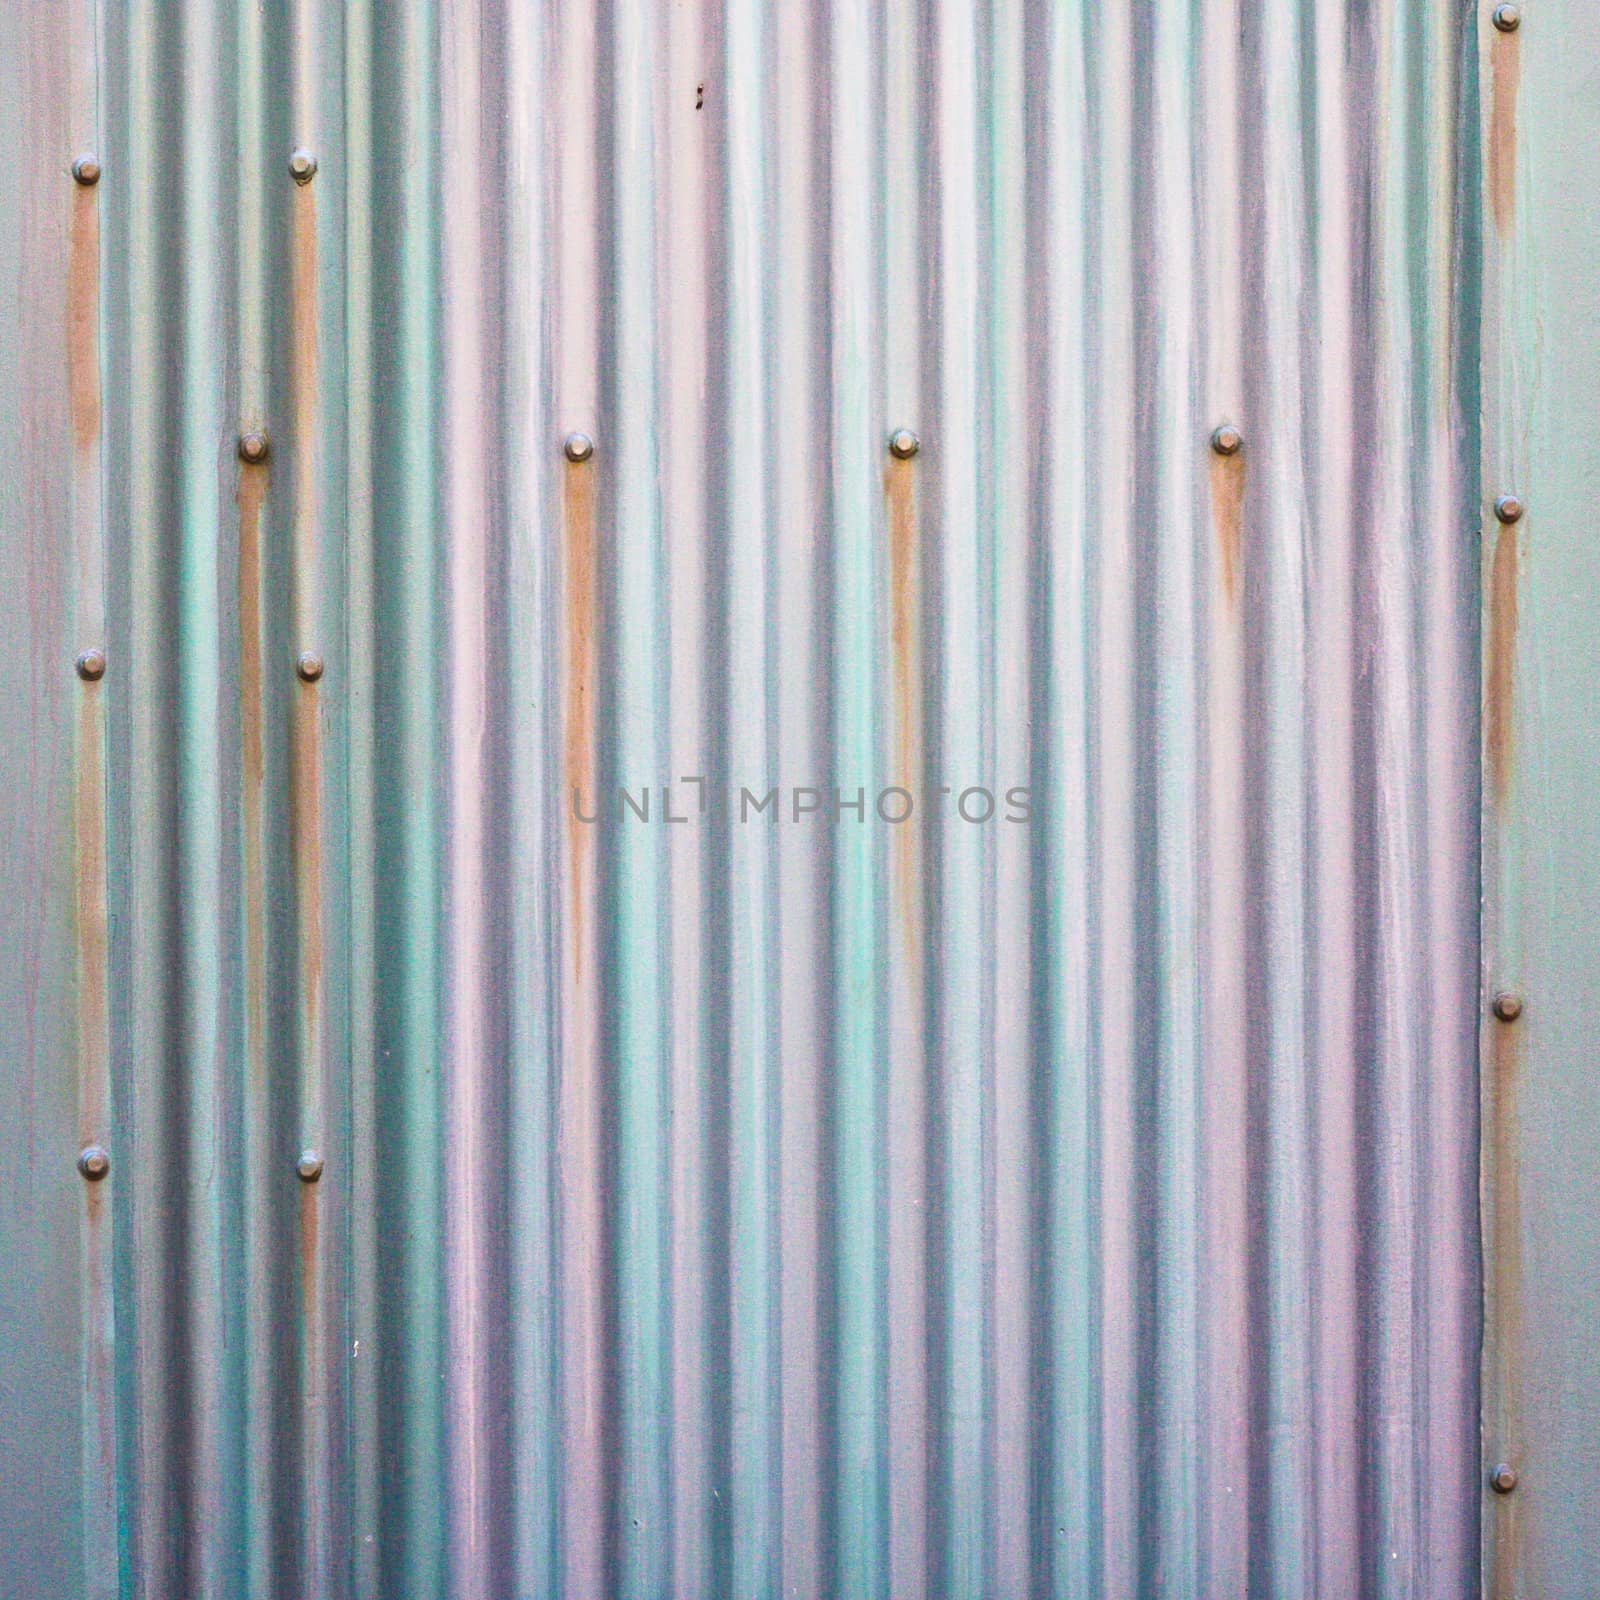 Corrugated metal as a striking background image